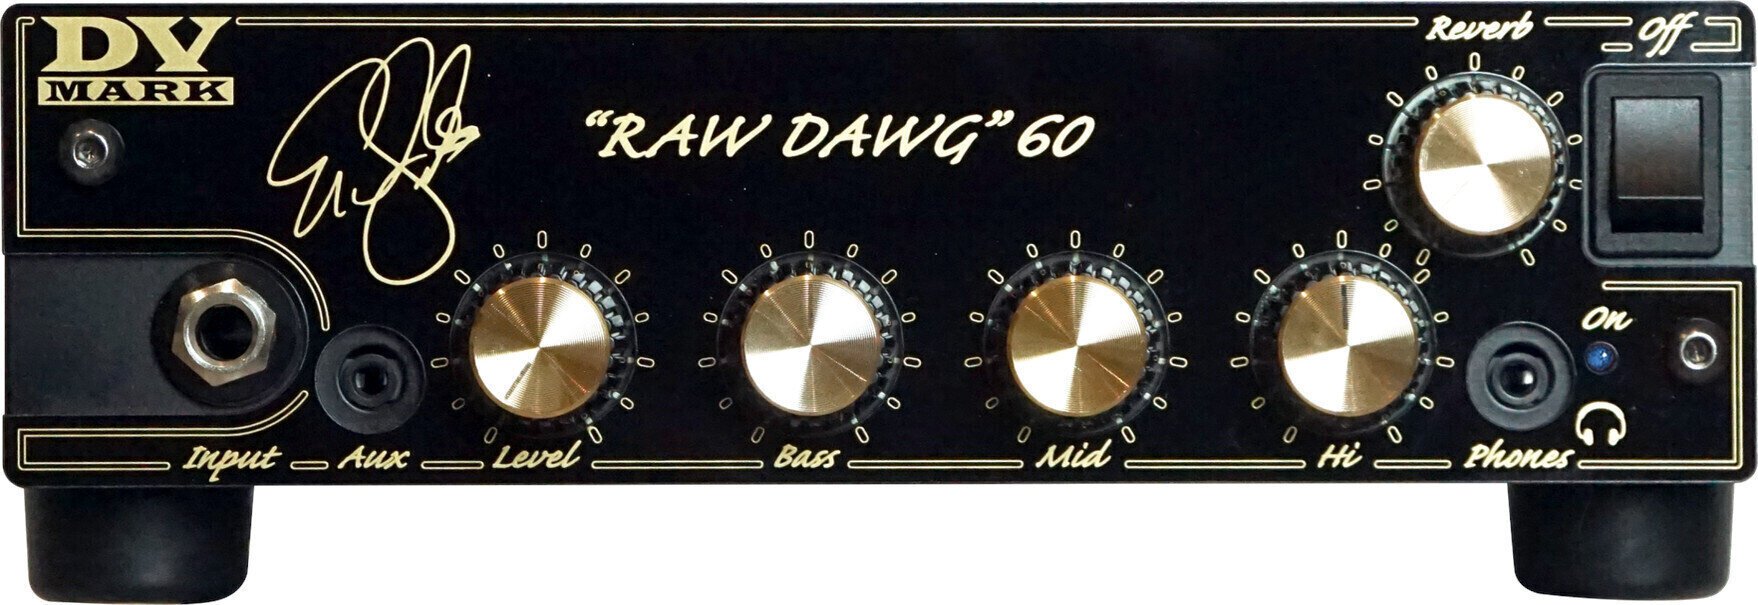 Wzmacniacz gitarowy hybrydowy DV Mark DV RAW DAWG 60